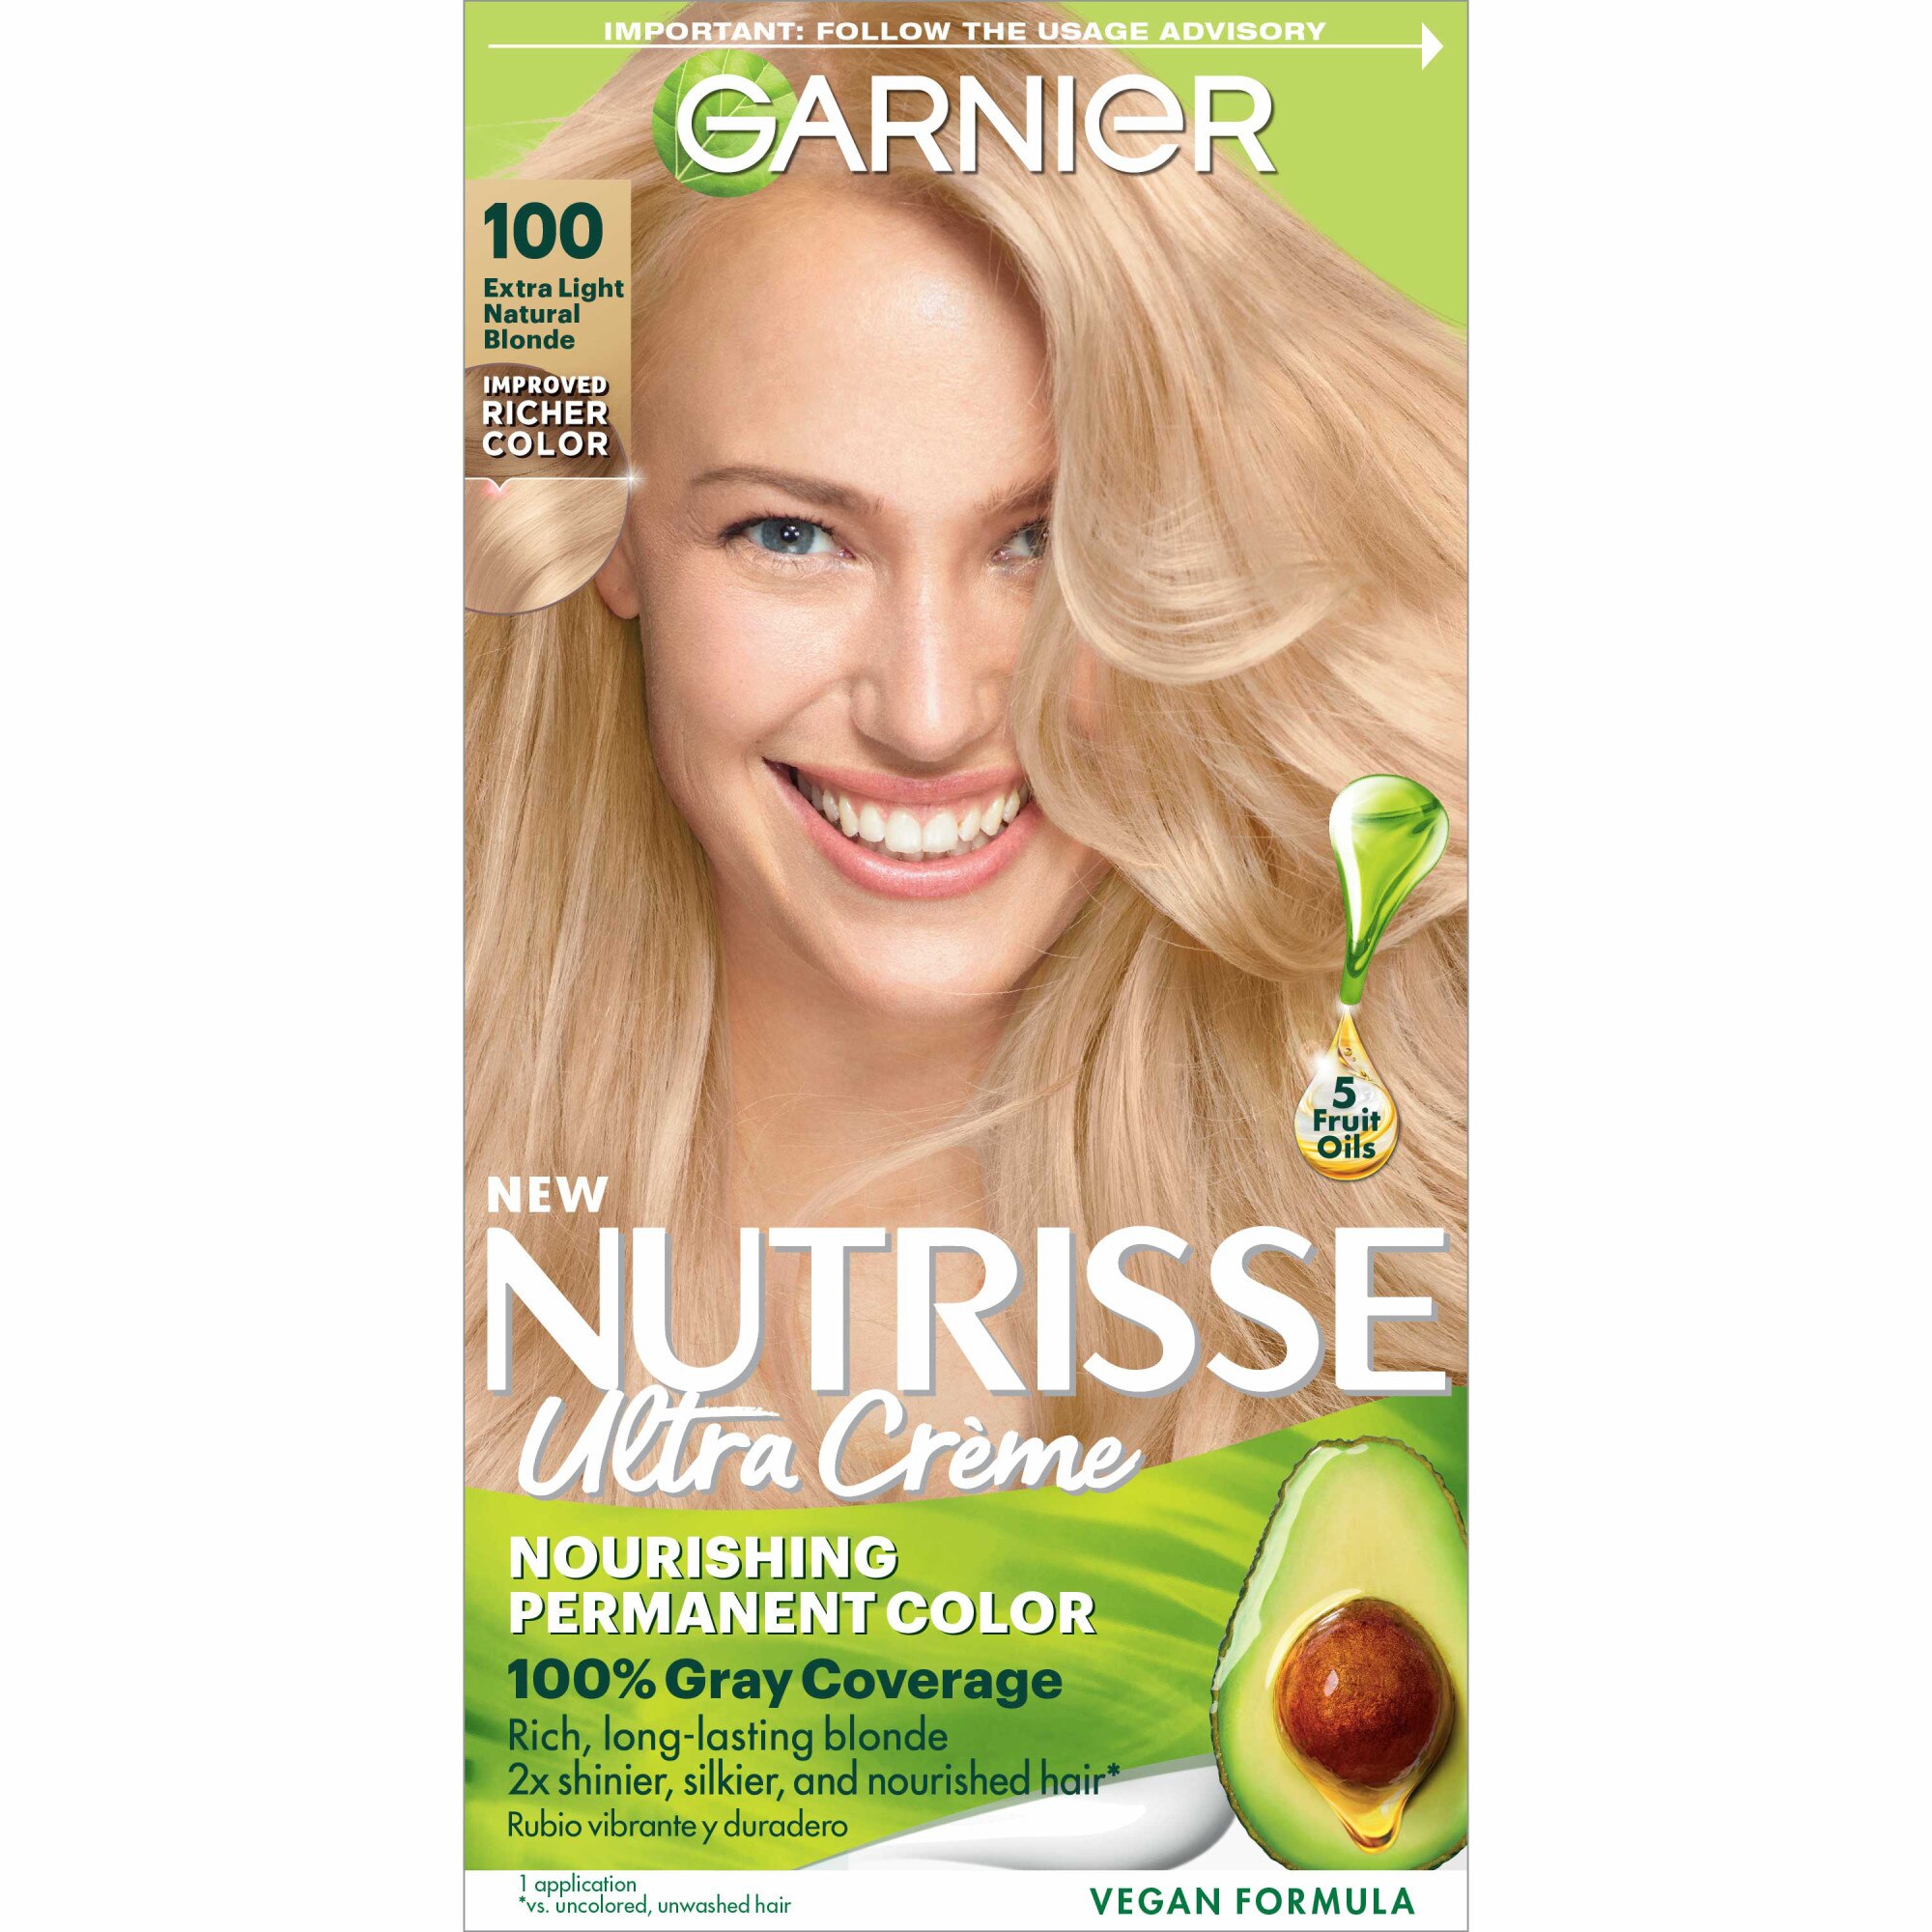 Garnier Nutrisse Nourishing Permanent Hair Color Creme, 100 Extra Light Natural Blonde , CVS